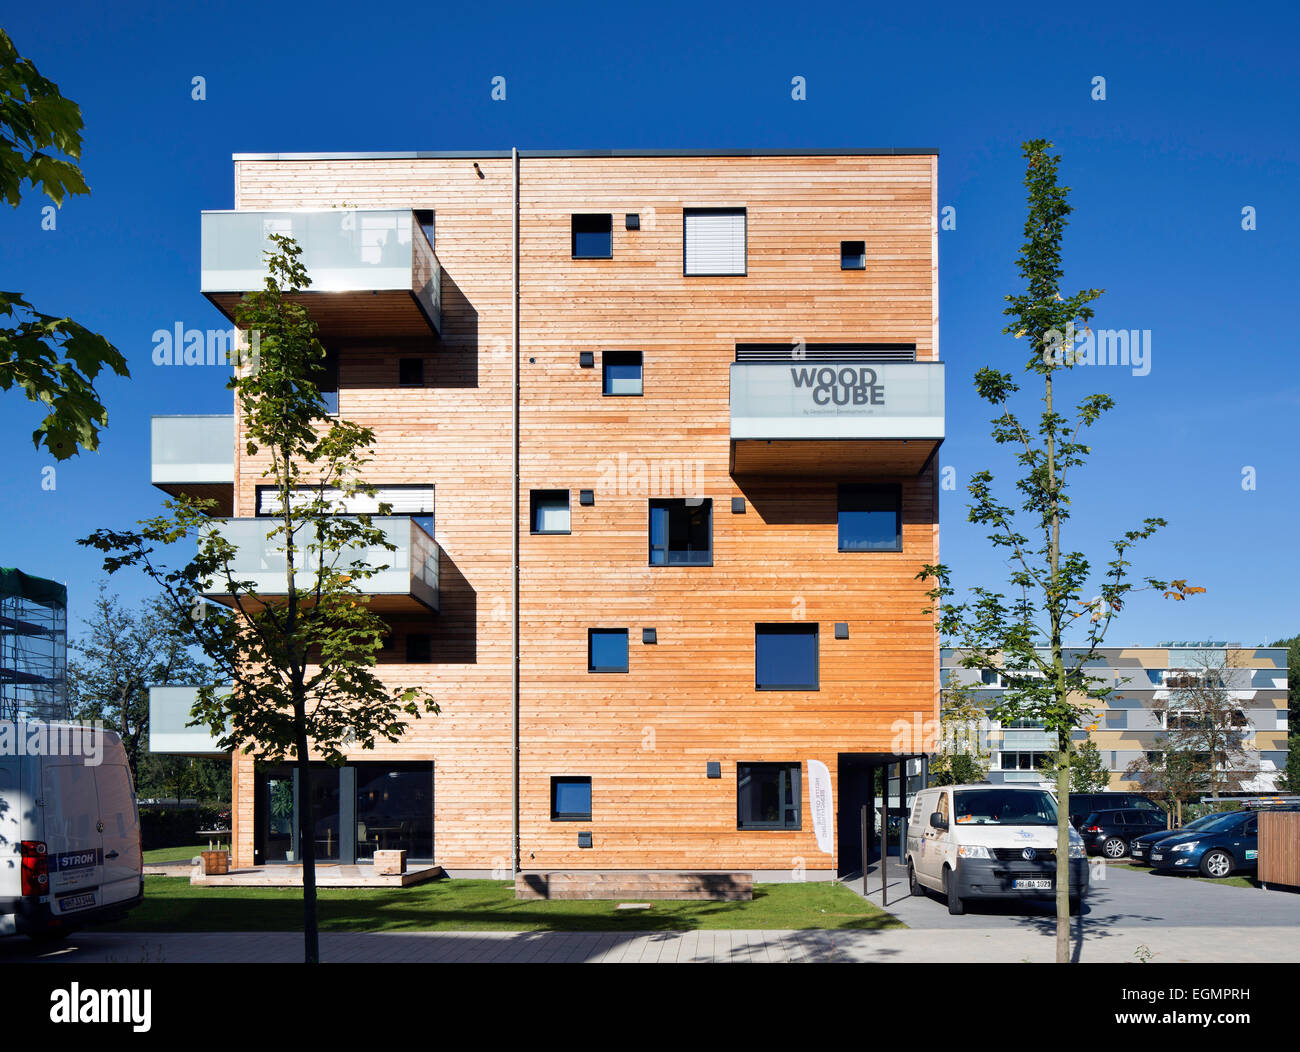 Woodcube casa residenziale, International Building Exhibition Amburgo, Inselpark, Wilhelmsburg, Amburgo, Germania Foto Stock